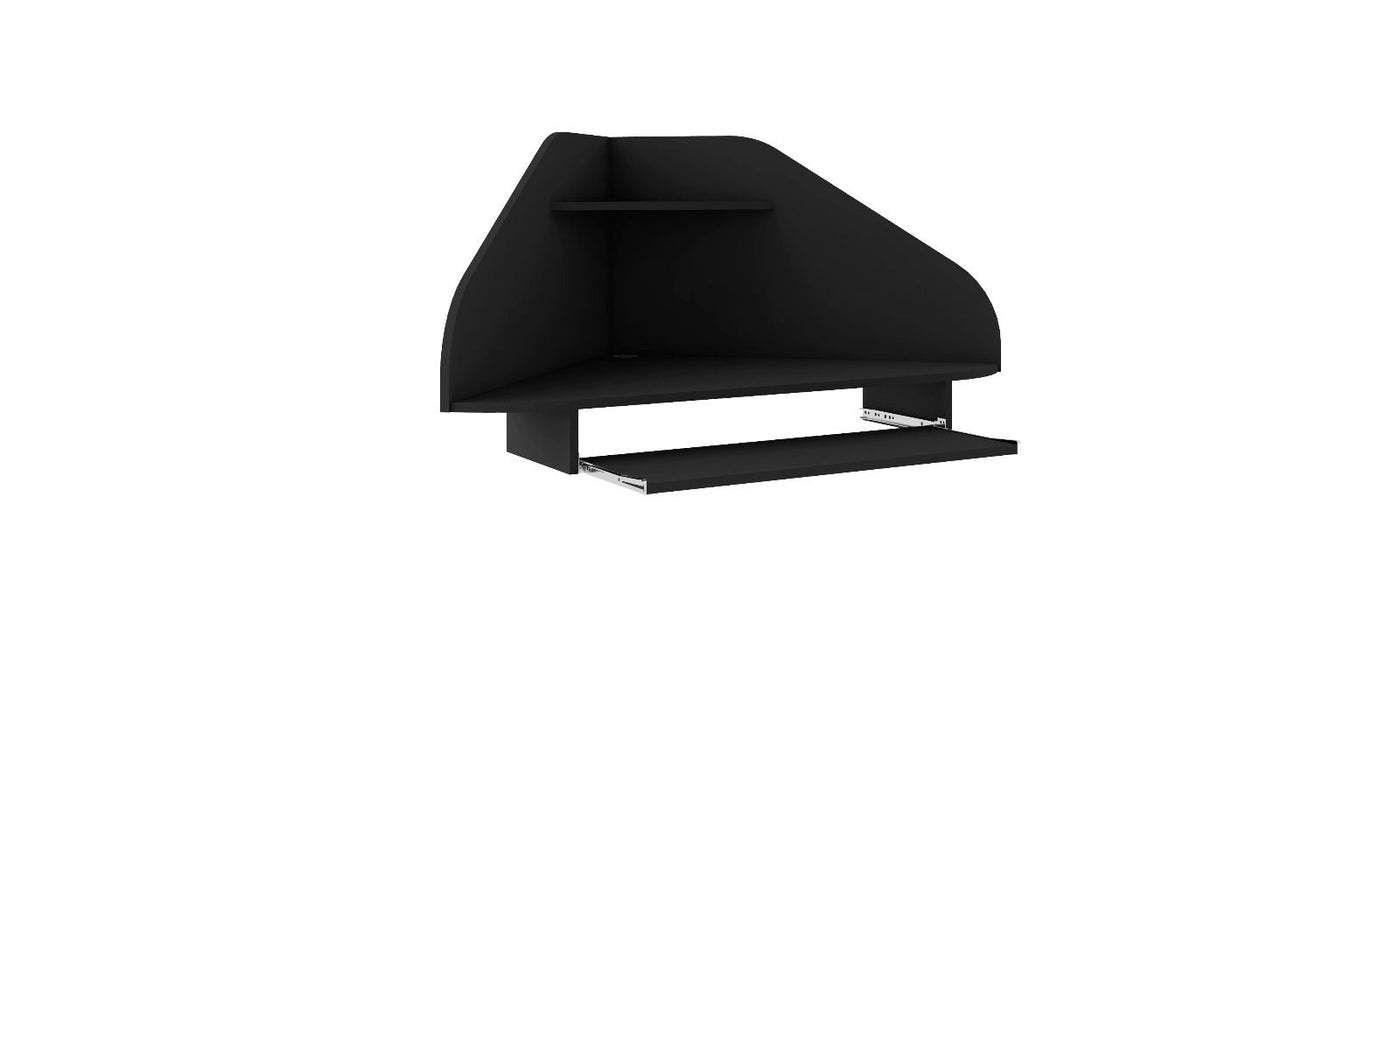 Gatutca Floating Corner Desk with Keyboard Shelf - Black